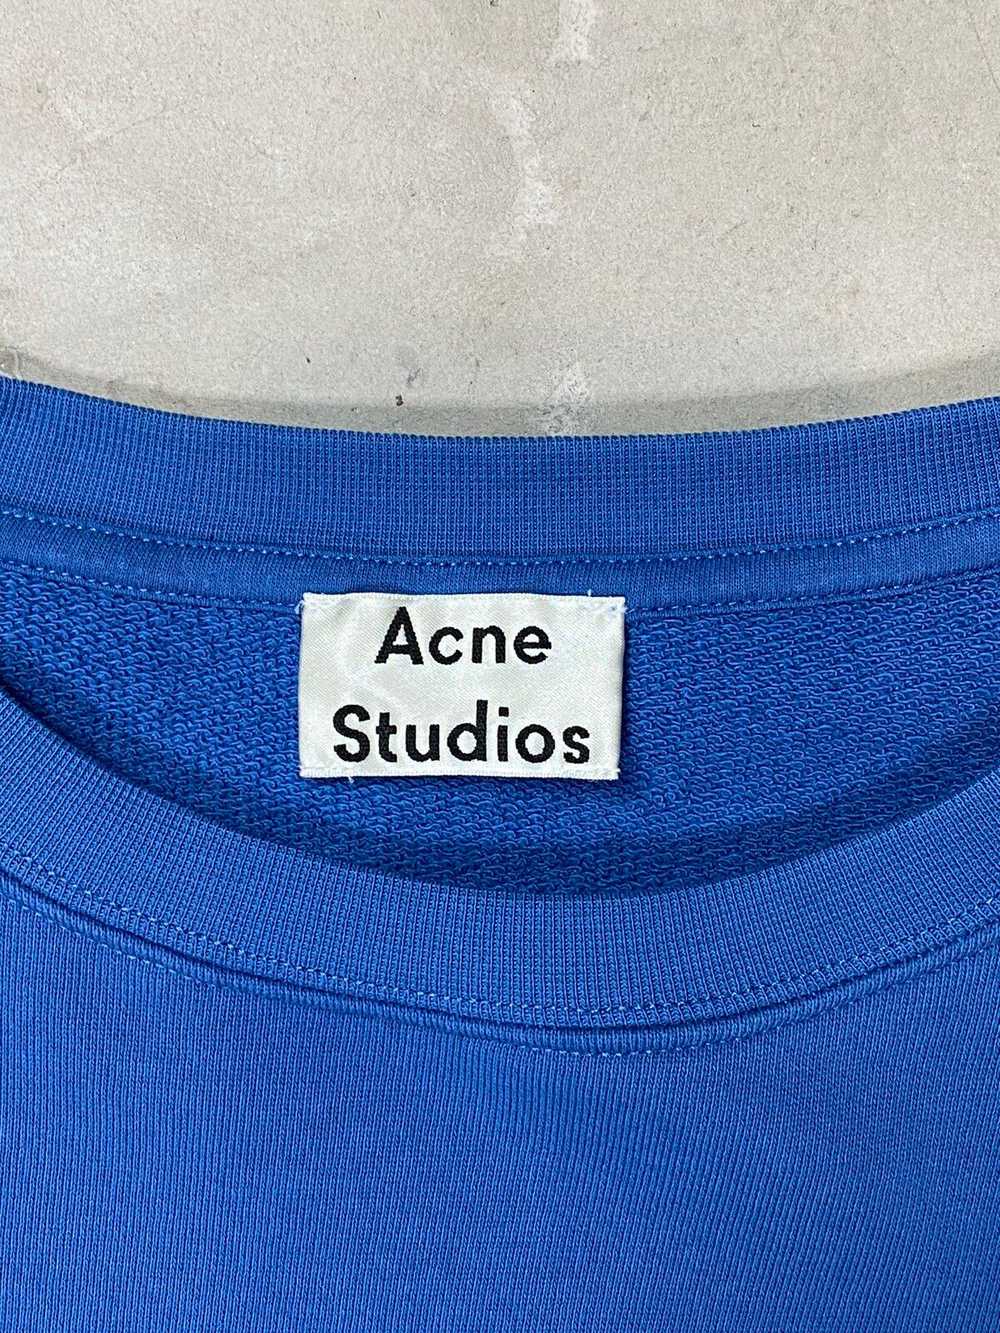 Acne Studios Acne Studios Crewneck - image 3